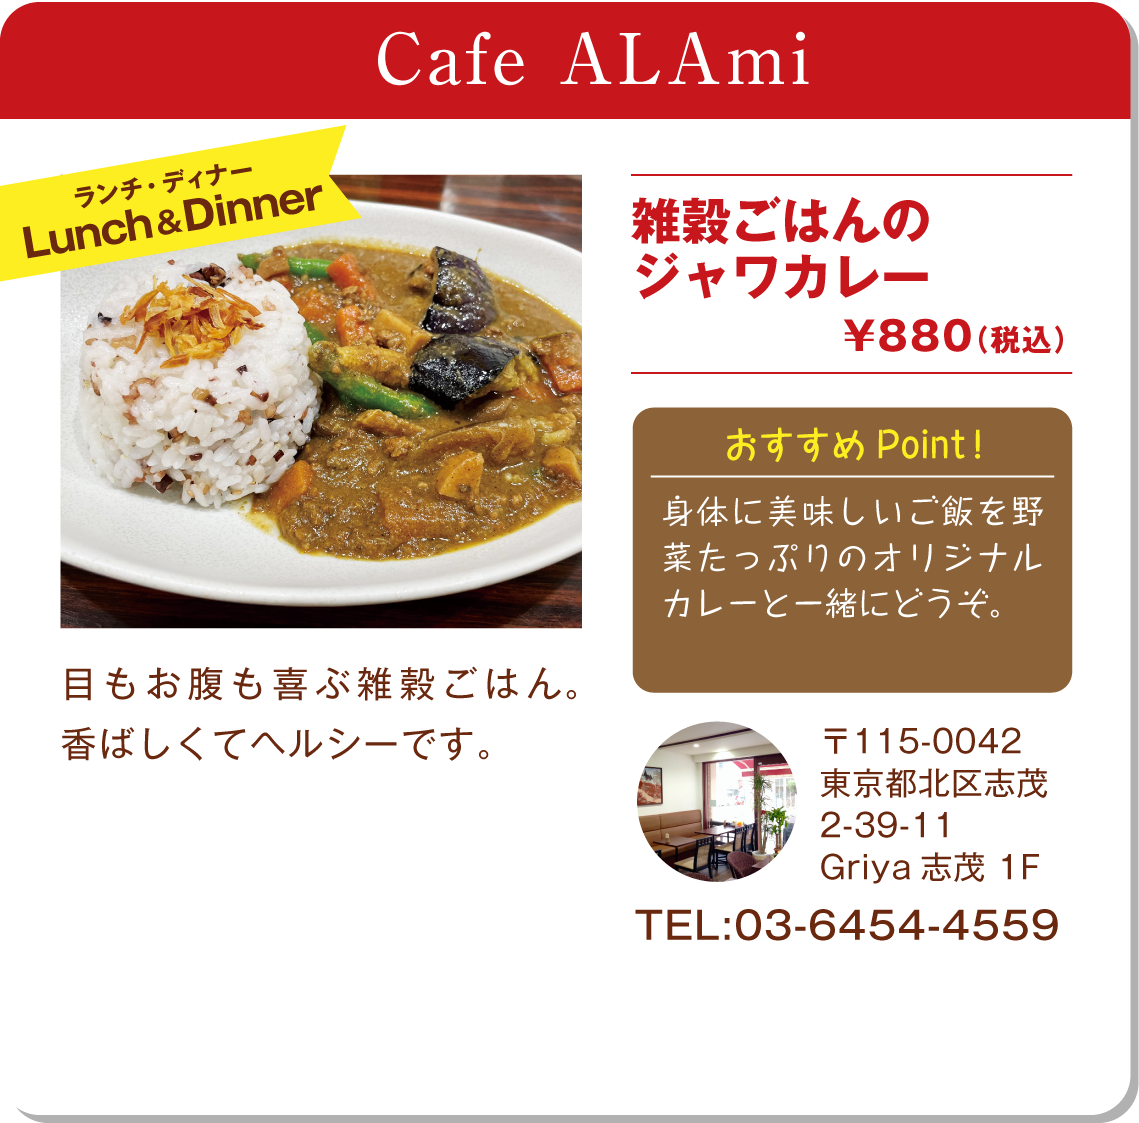 Cafe ALAmi